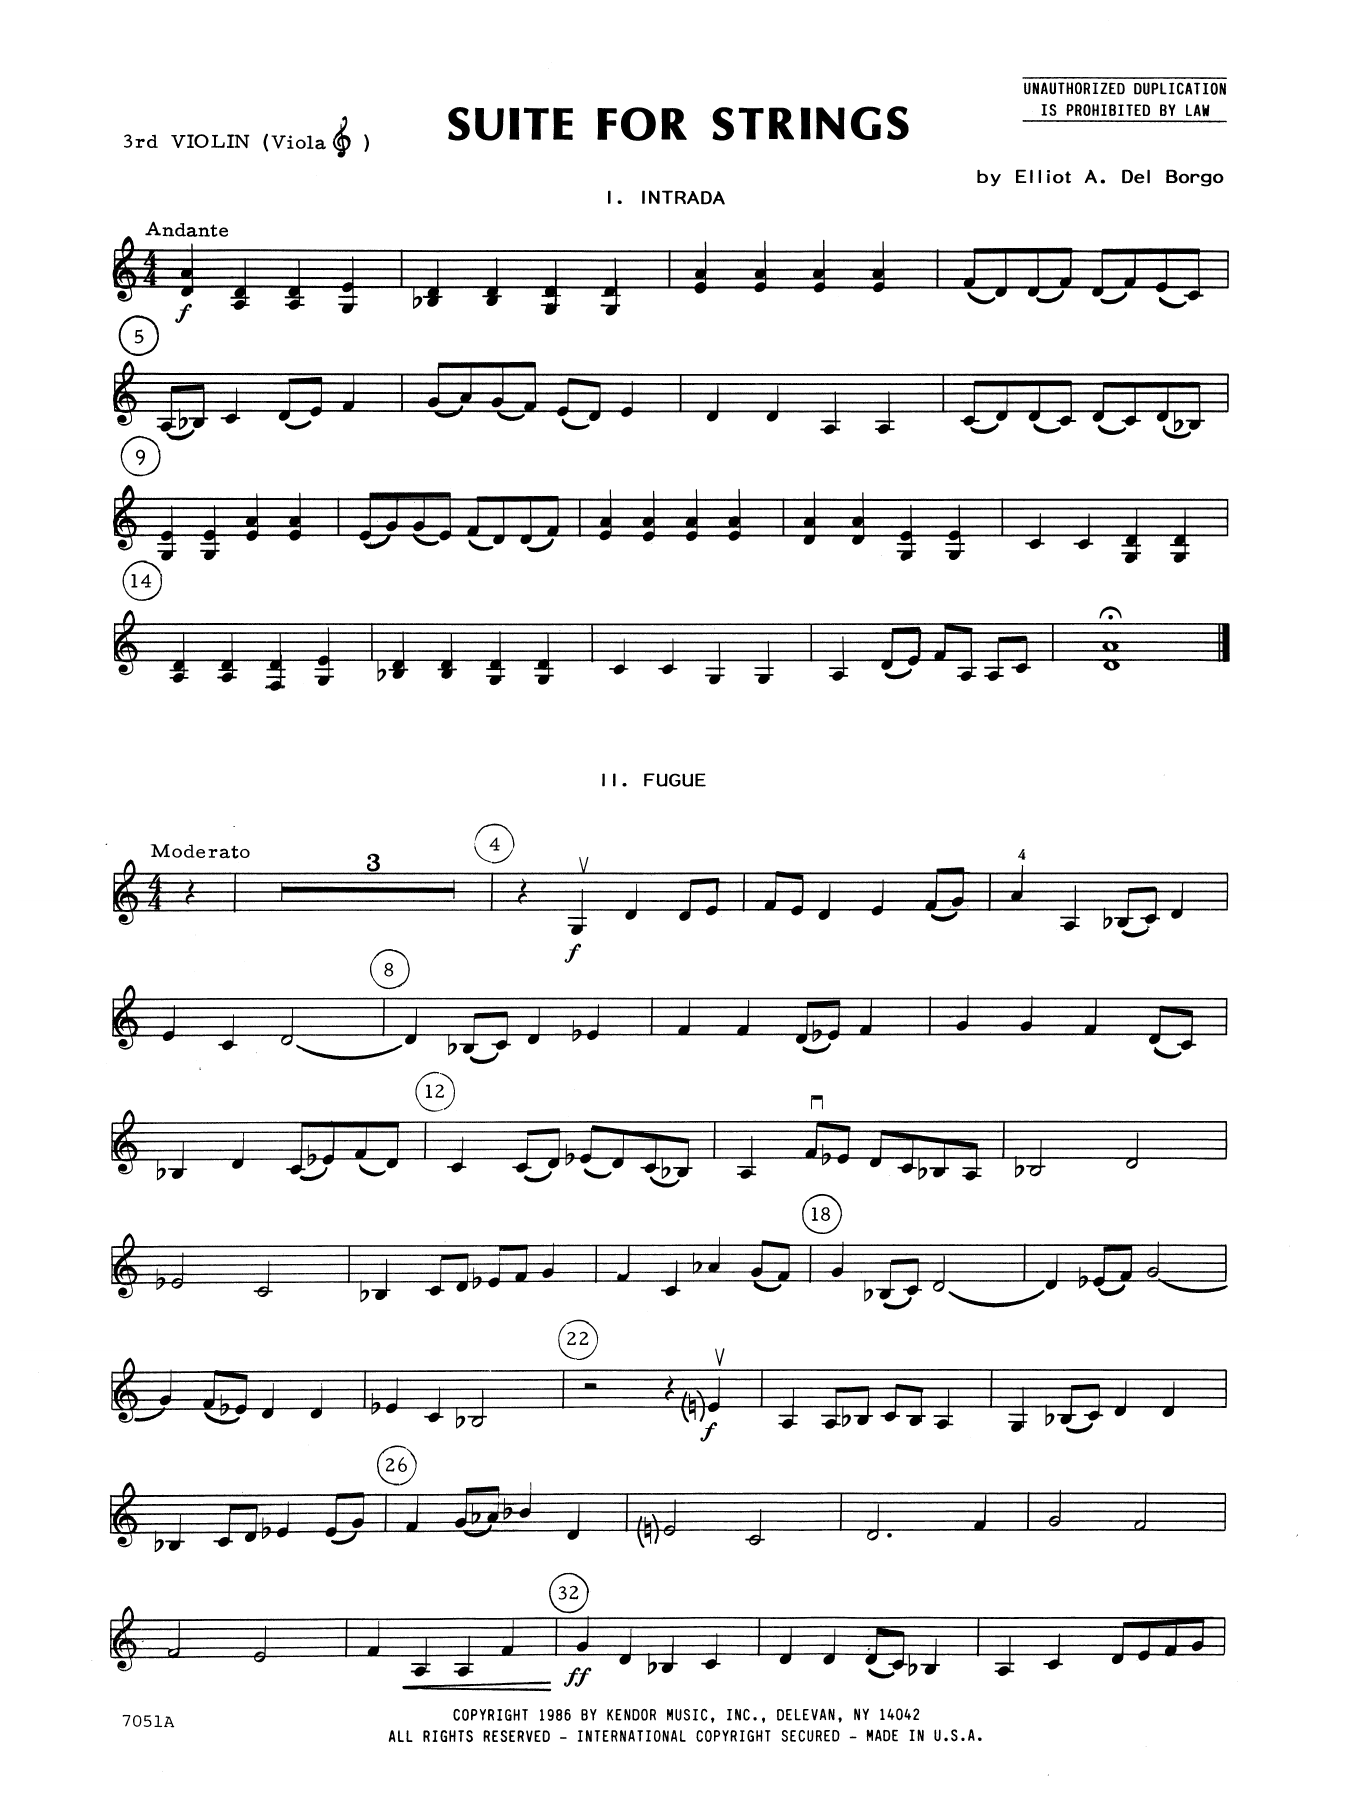 Download Elliot A. Del Borgo Suite for Strings - 3rd Violin Sheet Music